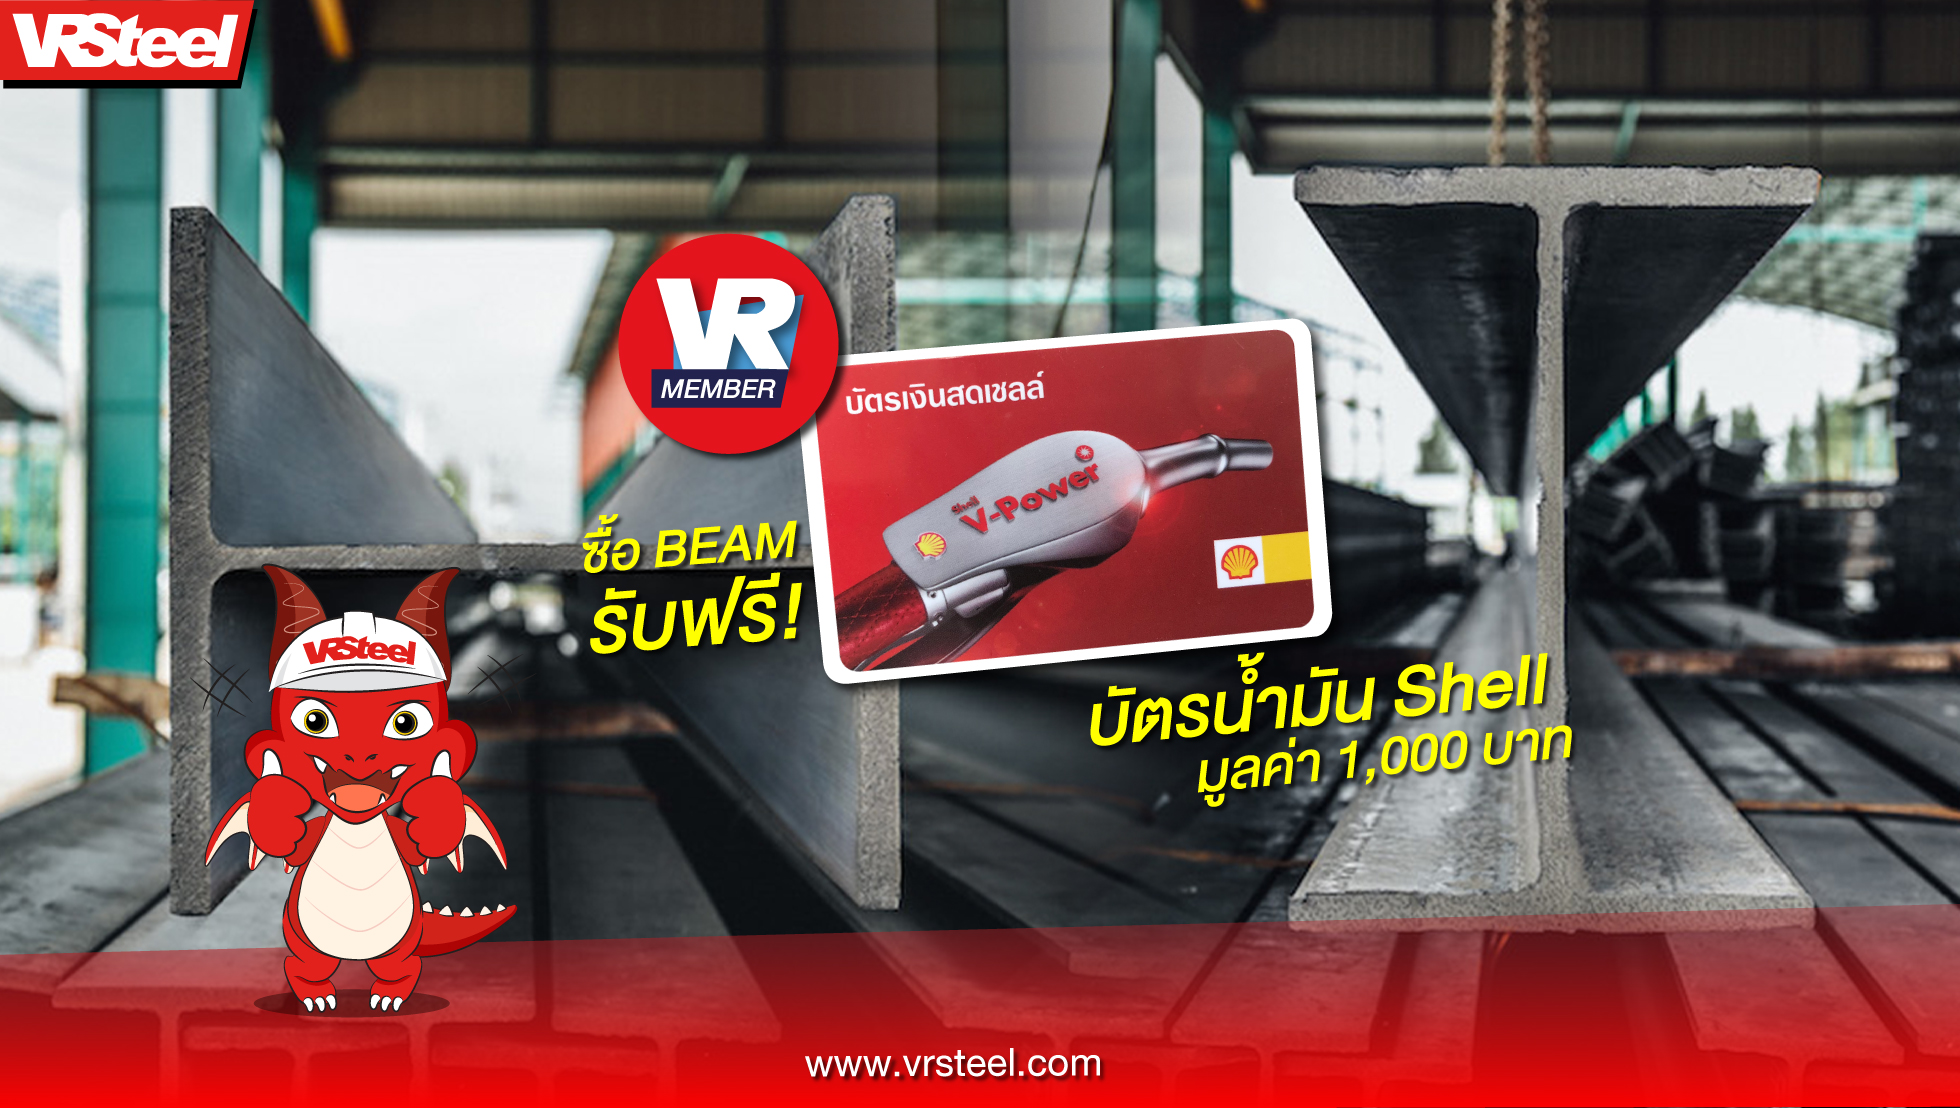 VRMember ซื้อ Beam รับบัตรน้ำมัน Shell ฟรี!